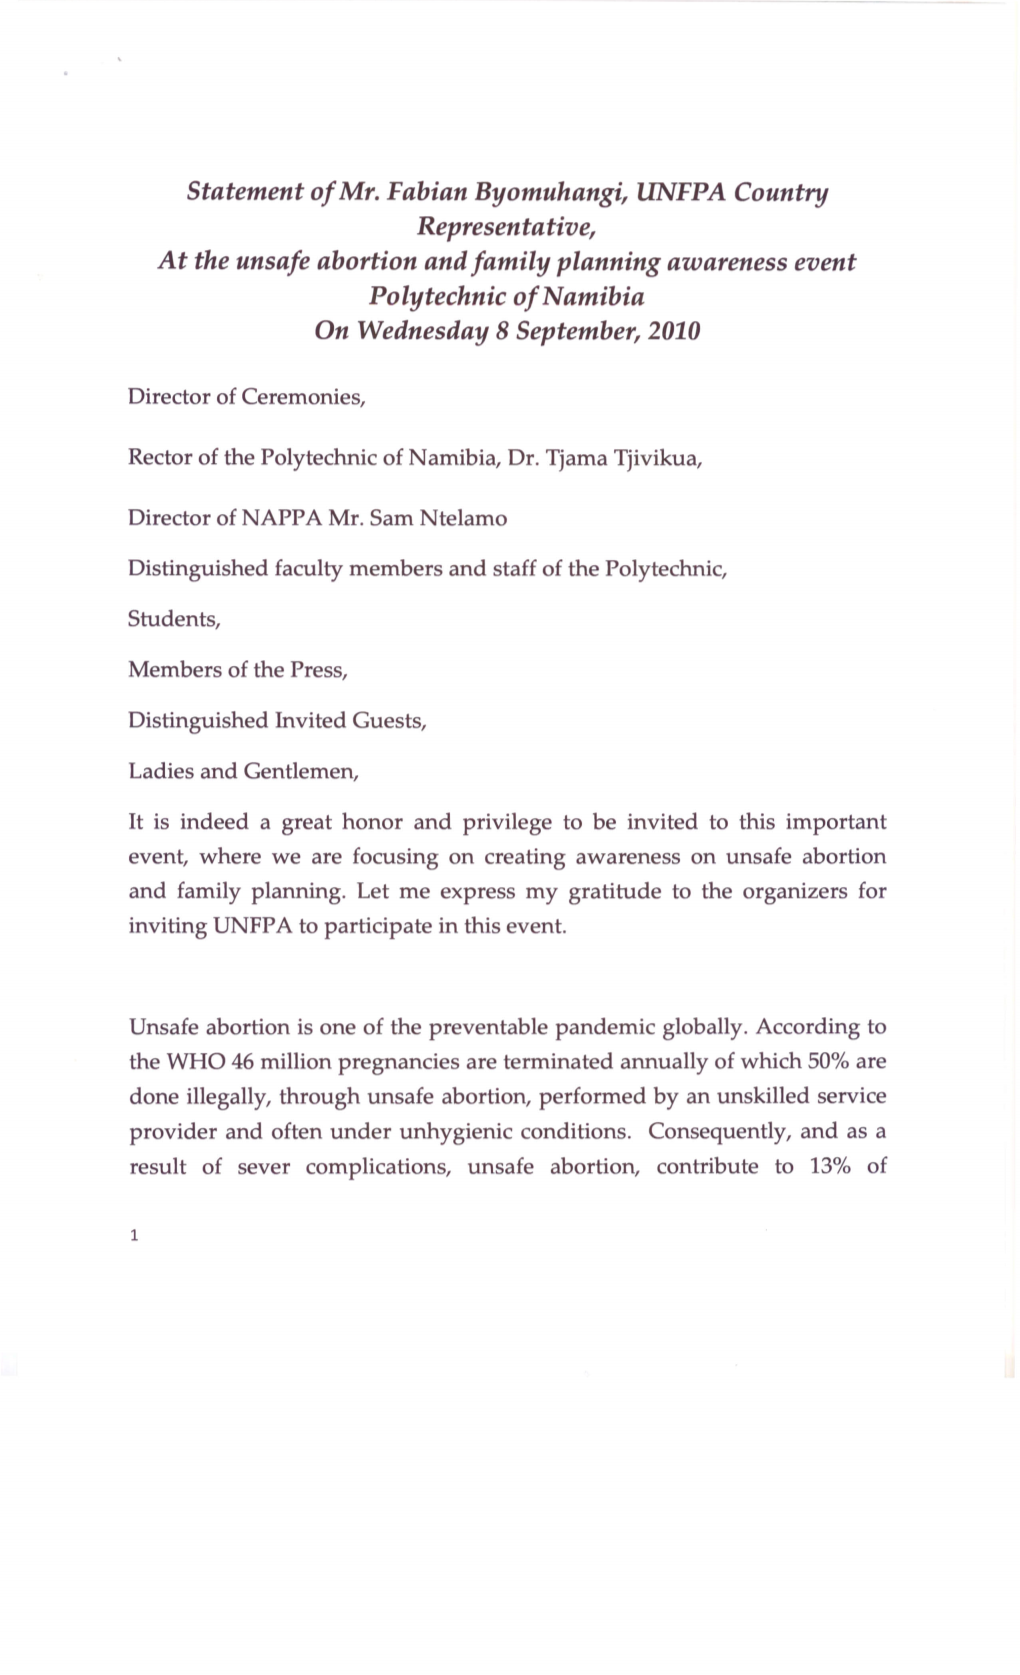 Statement of Mr. Fabian Byomuhangi, UNFPA Country Representative, At